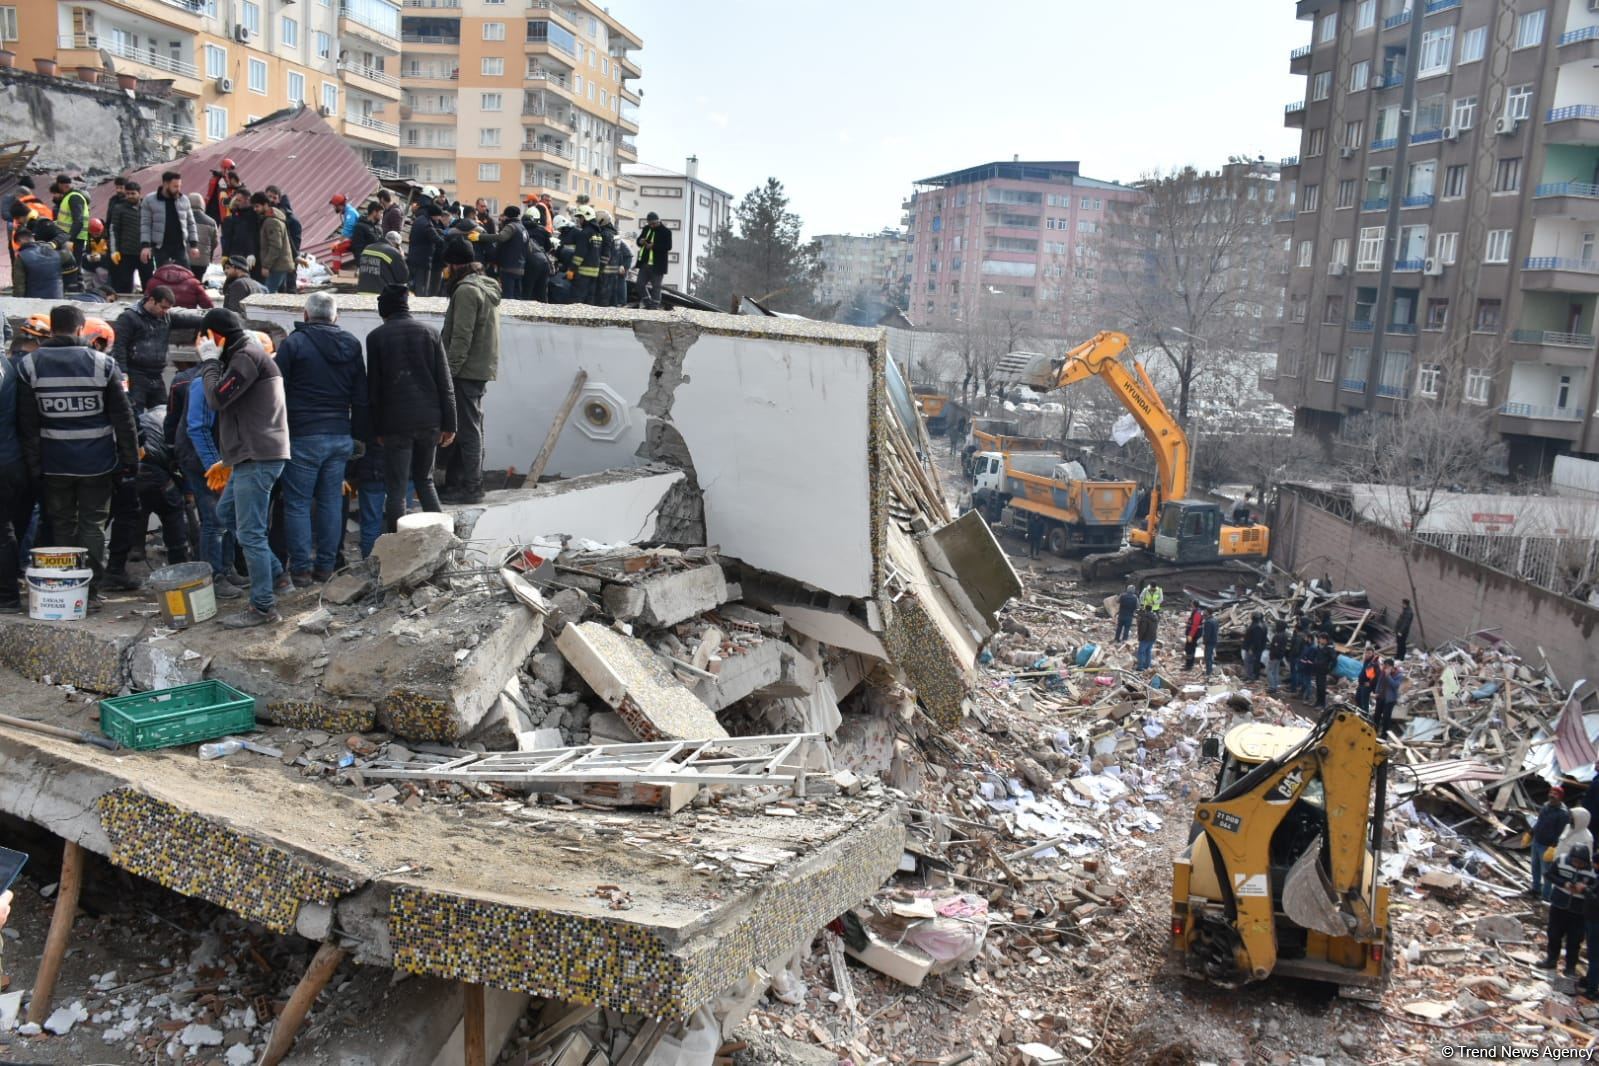 Türkiye earthquake death toll rises to 14,351